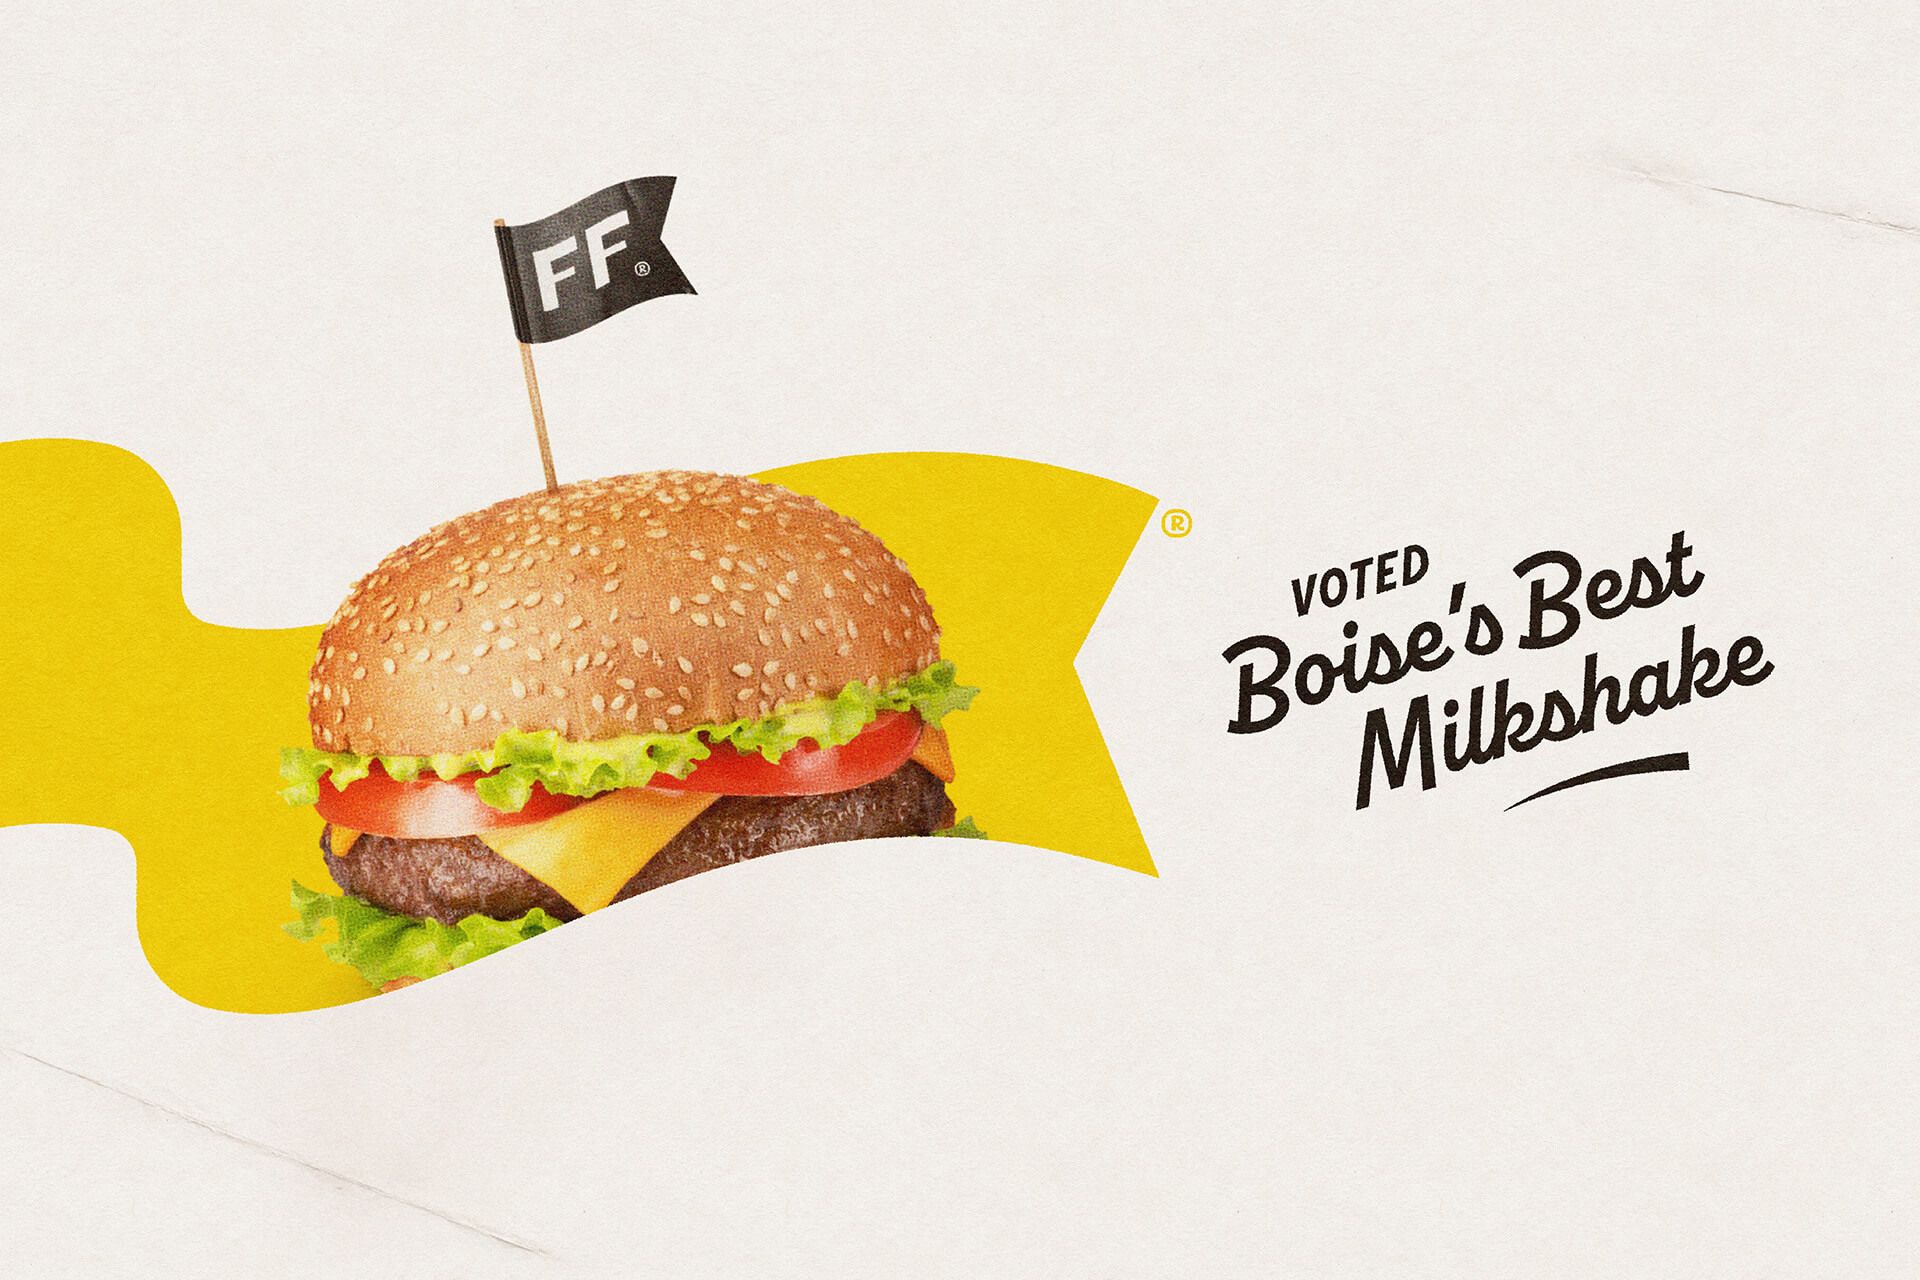 Brand lockup for Fanci Freez and Voted Best Milkshake in Boise tagline